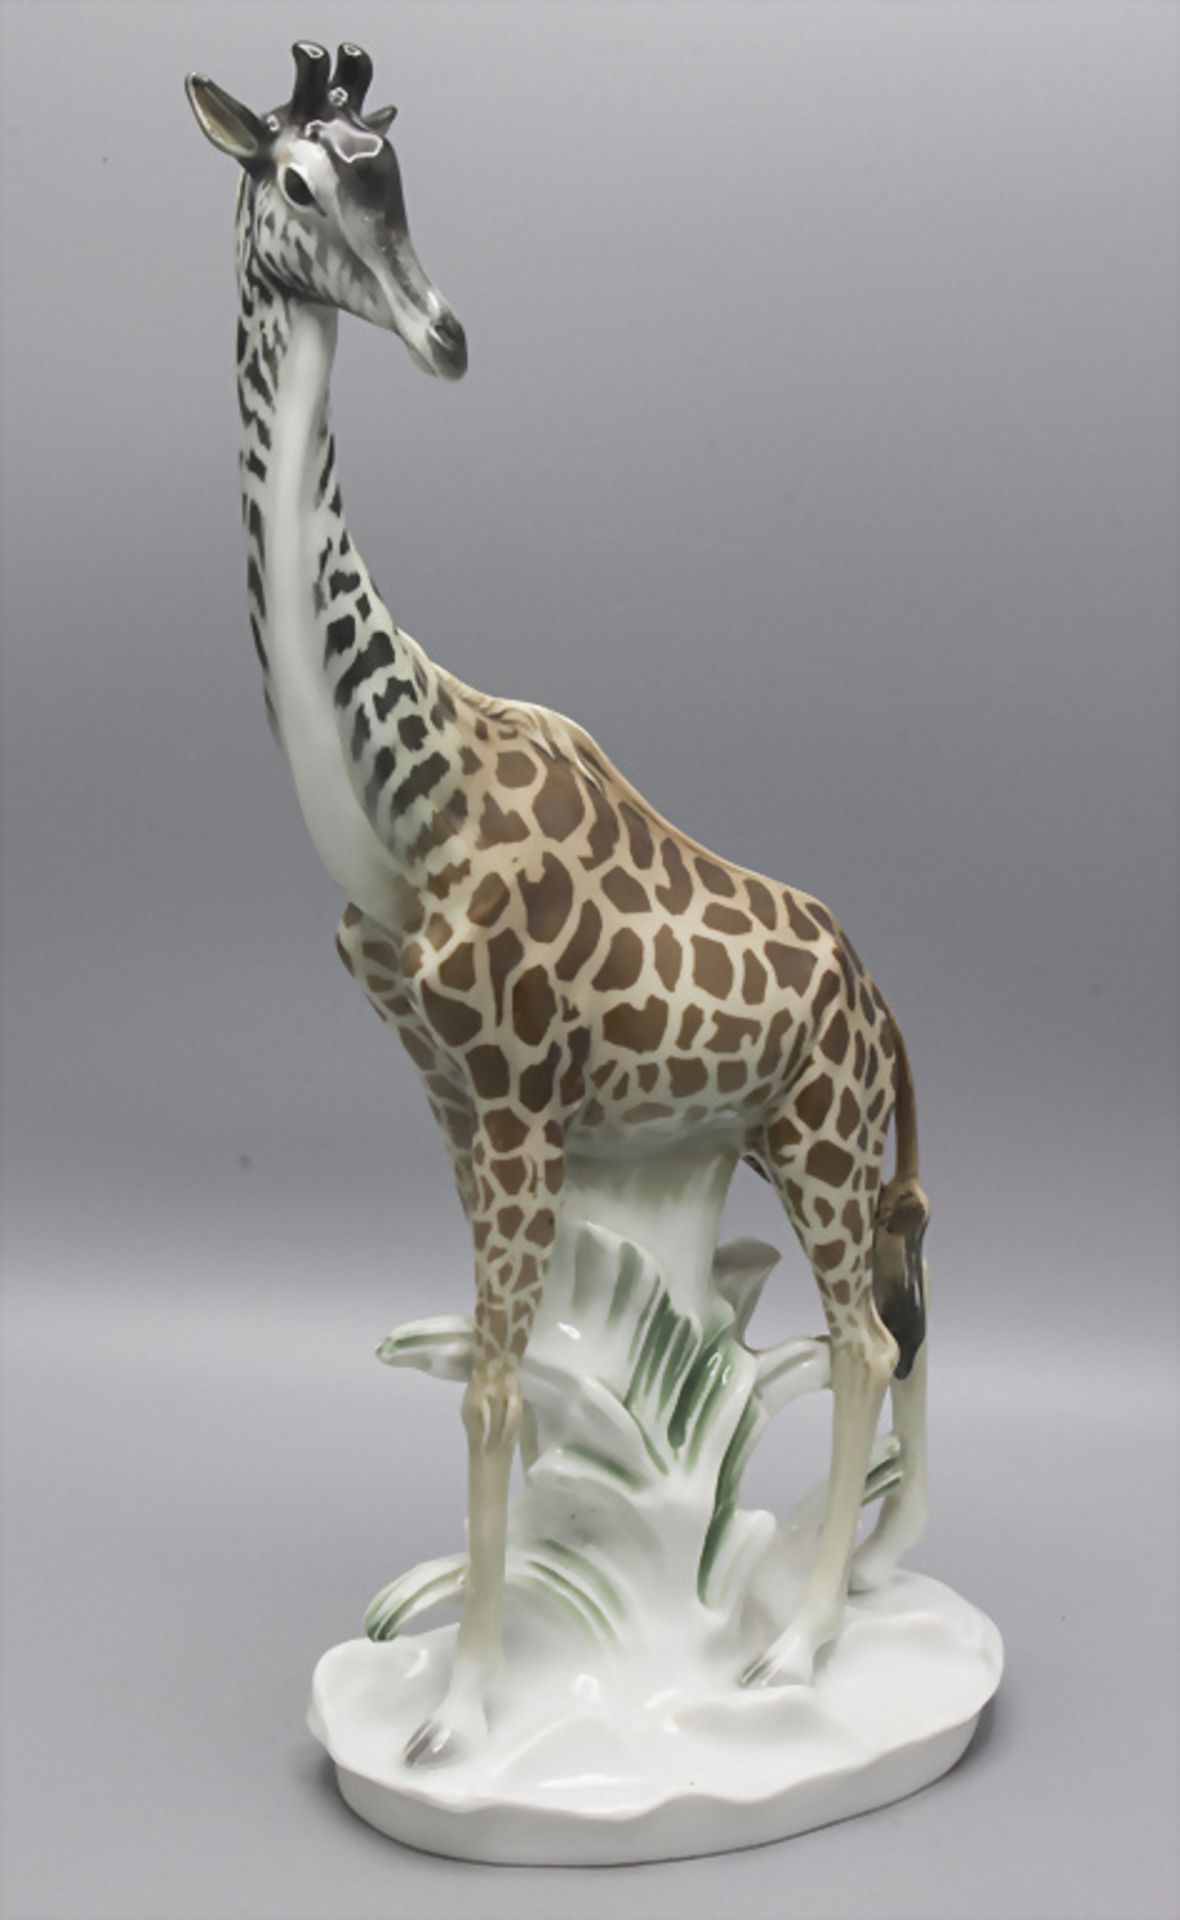 Große und sehr seltene Tierfigur 'Giraffe' / A large and very rare animal sculpture of a ...